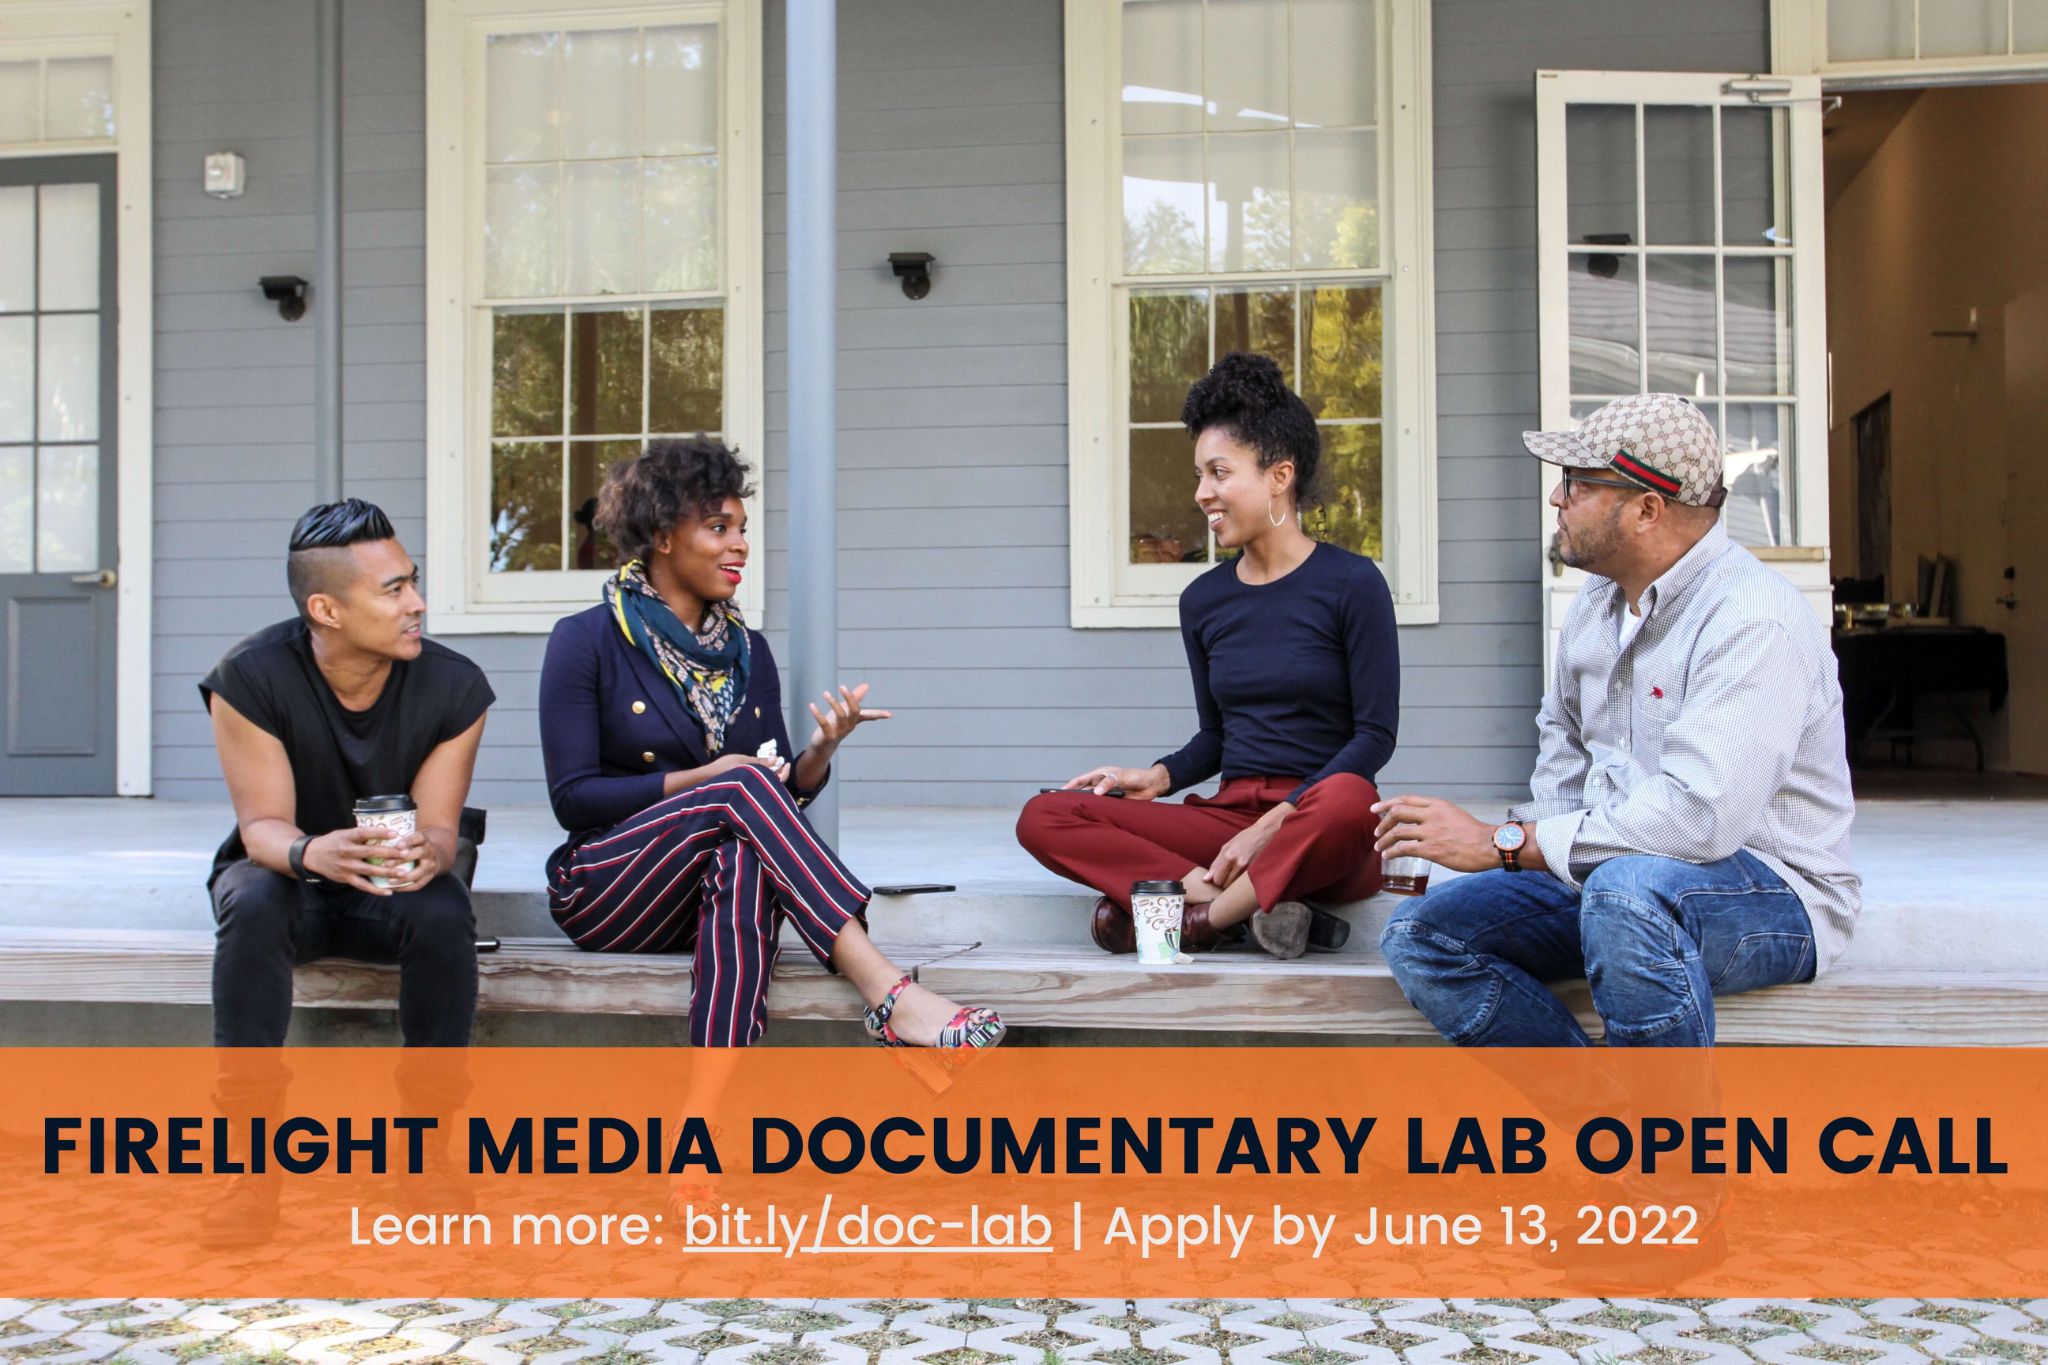 Firelight Media provides grants to BIPOC filmmakers. Deadline is June 13.